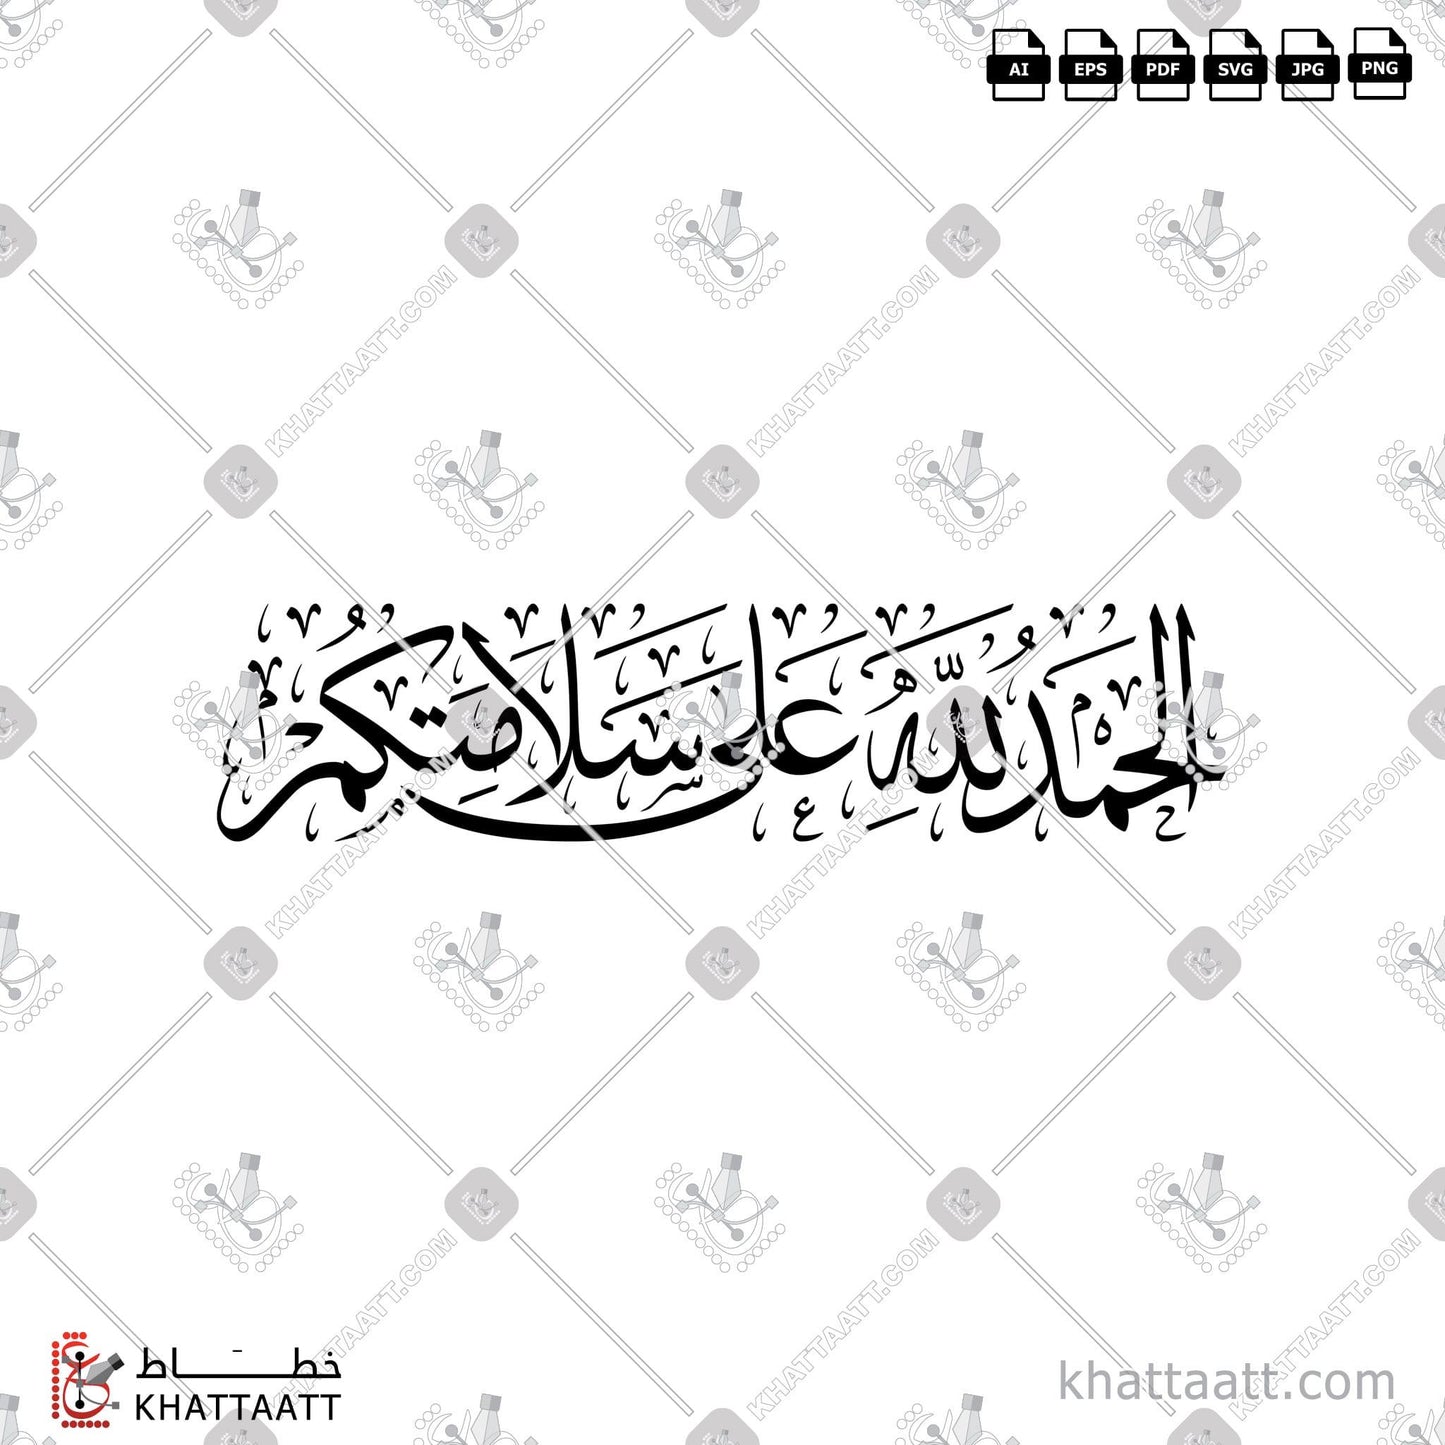 Download Arabic Calligraphy of الحمد لله على سلامتكم in Thuluth - خط الثلث in vector and .png